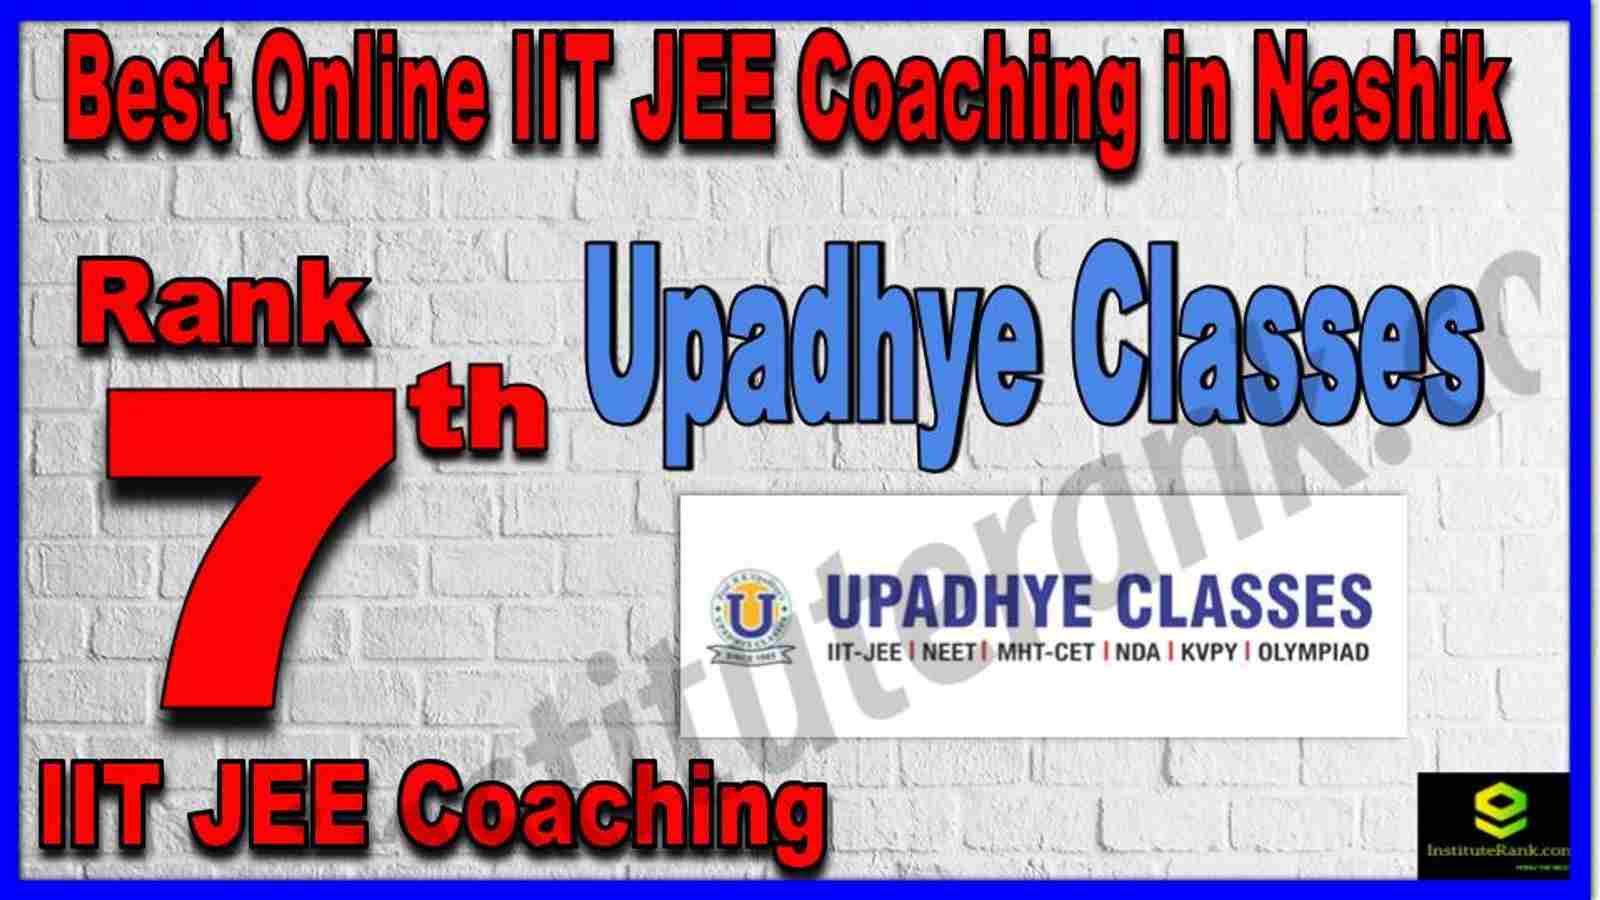 Rank 7th Best Online IIT JEE Coaching in Nashik